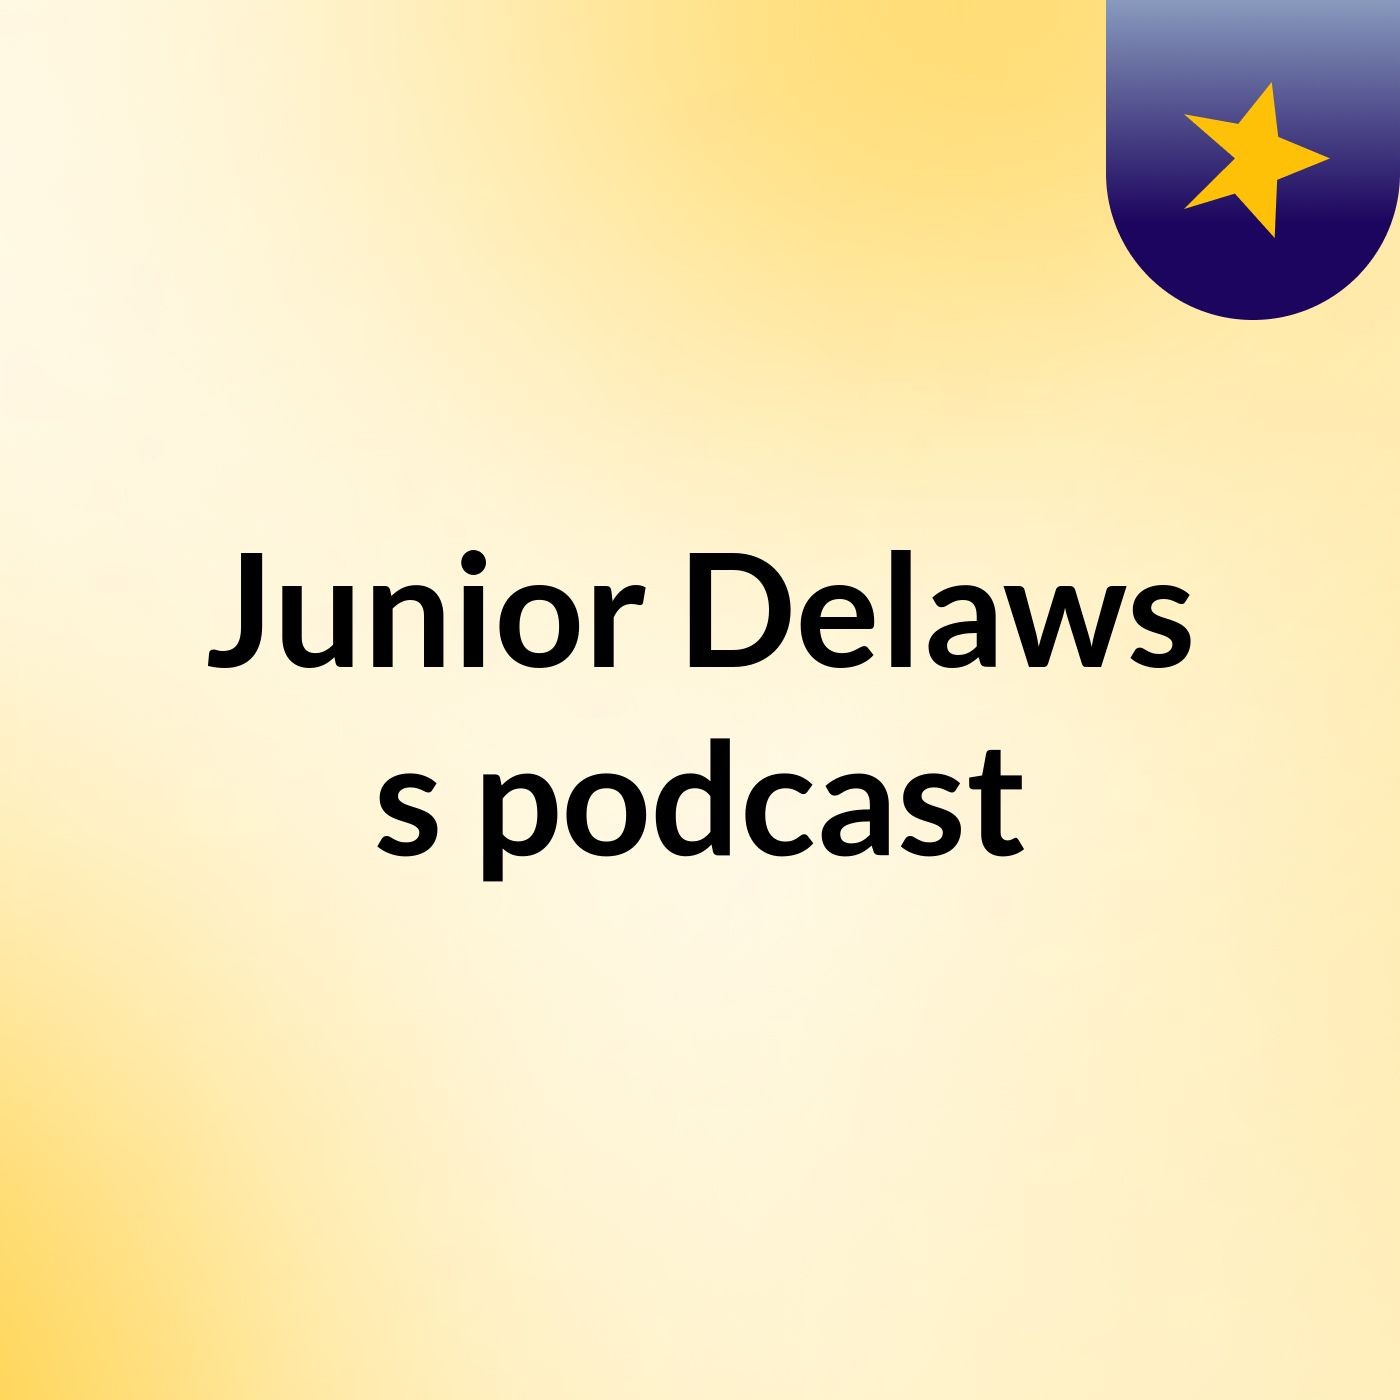 Episode 1 - Junior Delaws's podcast